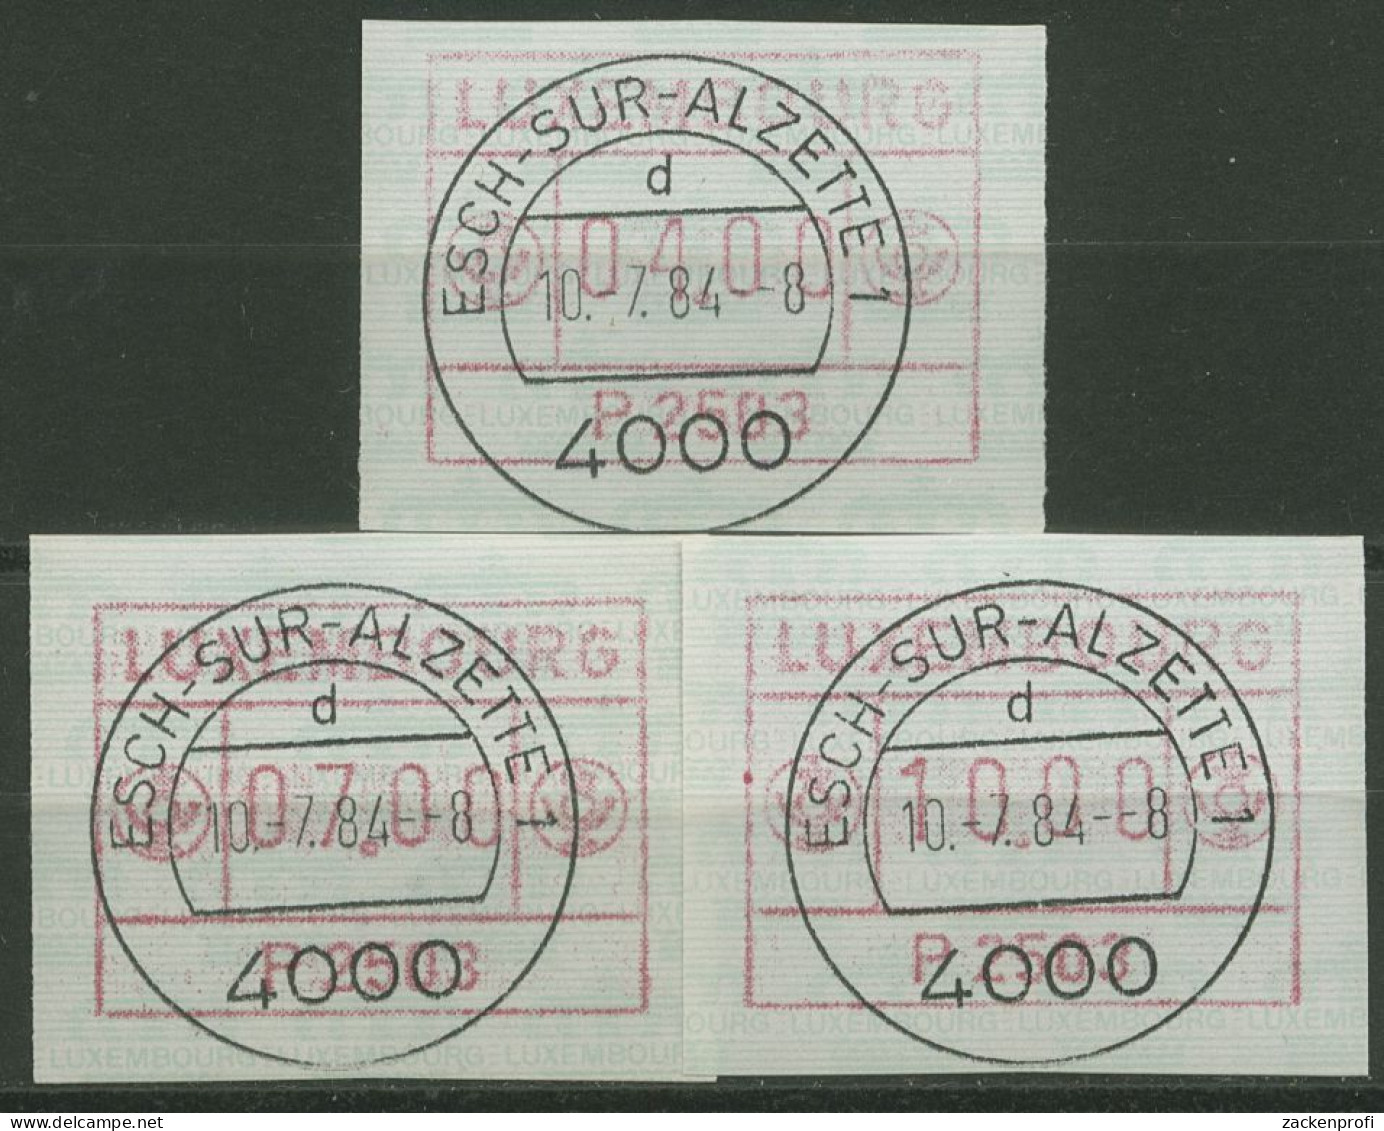 Luxemburg 1983 Automatenmarke Automat P 2503 Satz 1.3 B S1 Gestempelt - Postage Labels